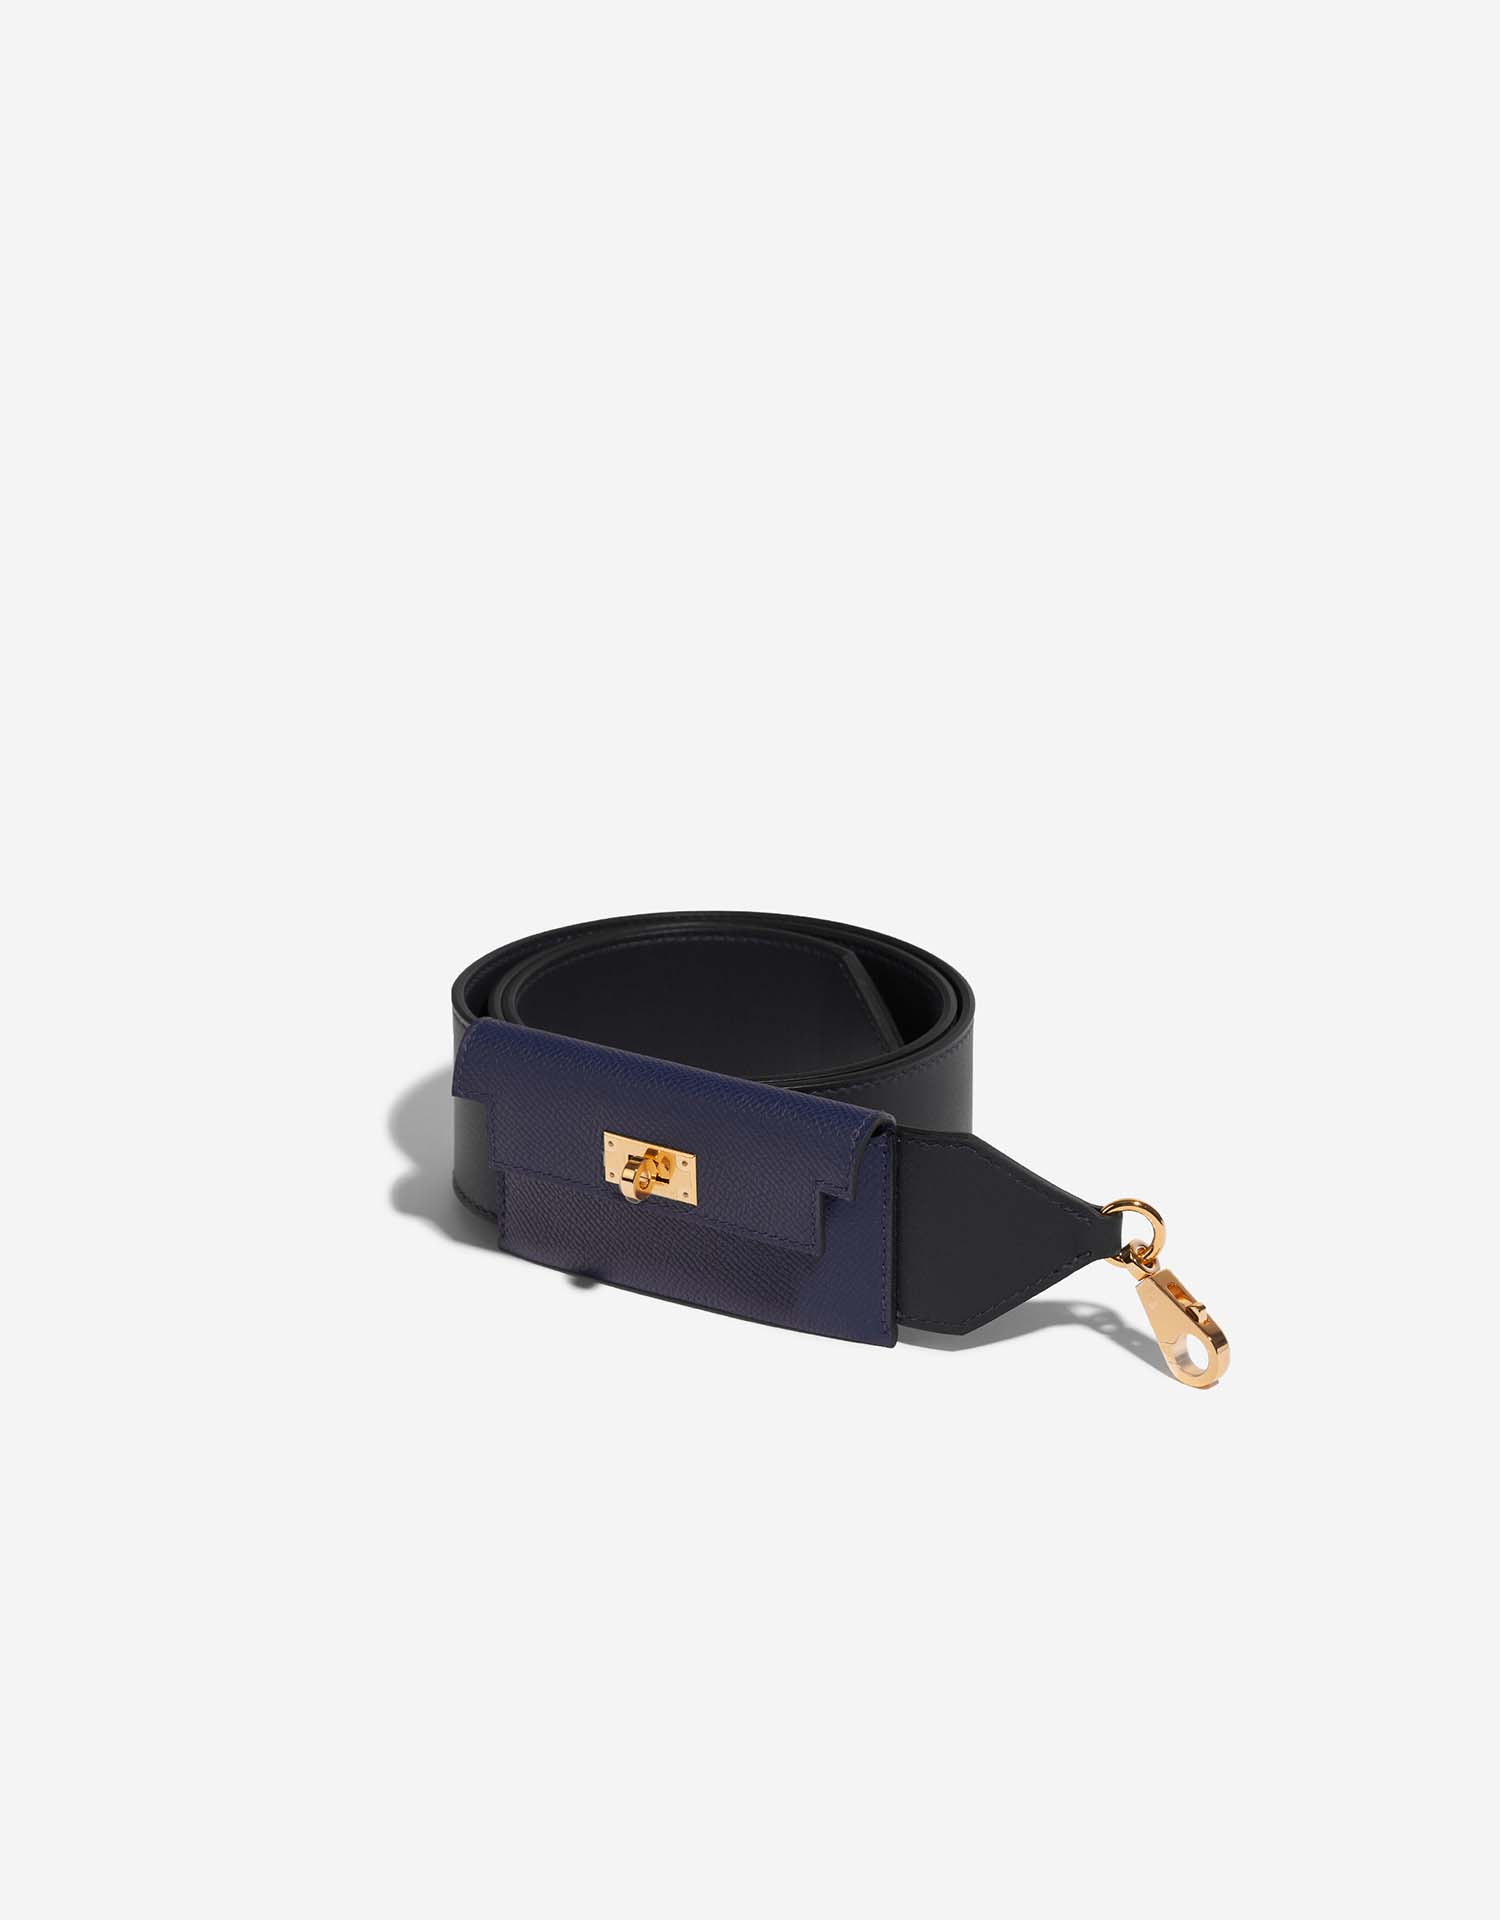 Hermes Black Bandouliere Kelly Pocket - Vintage Lux